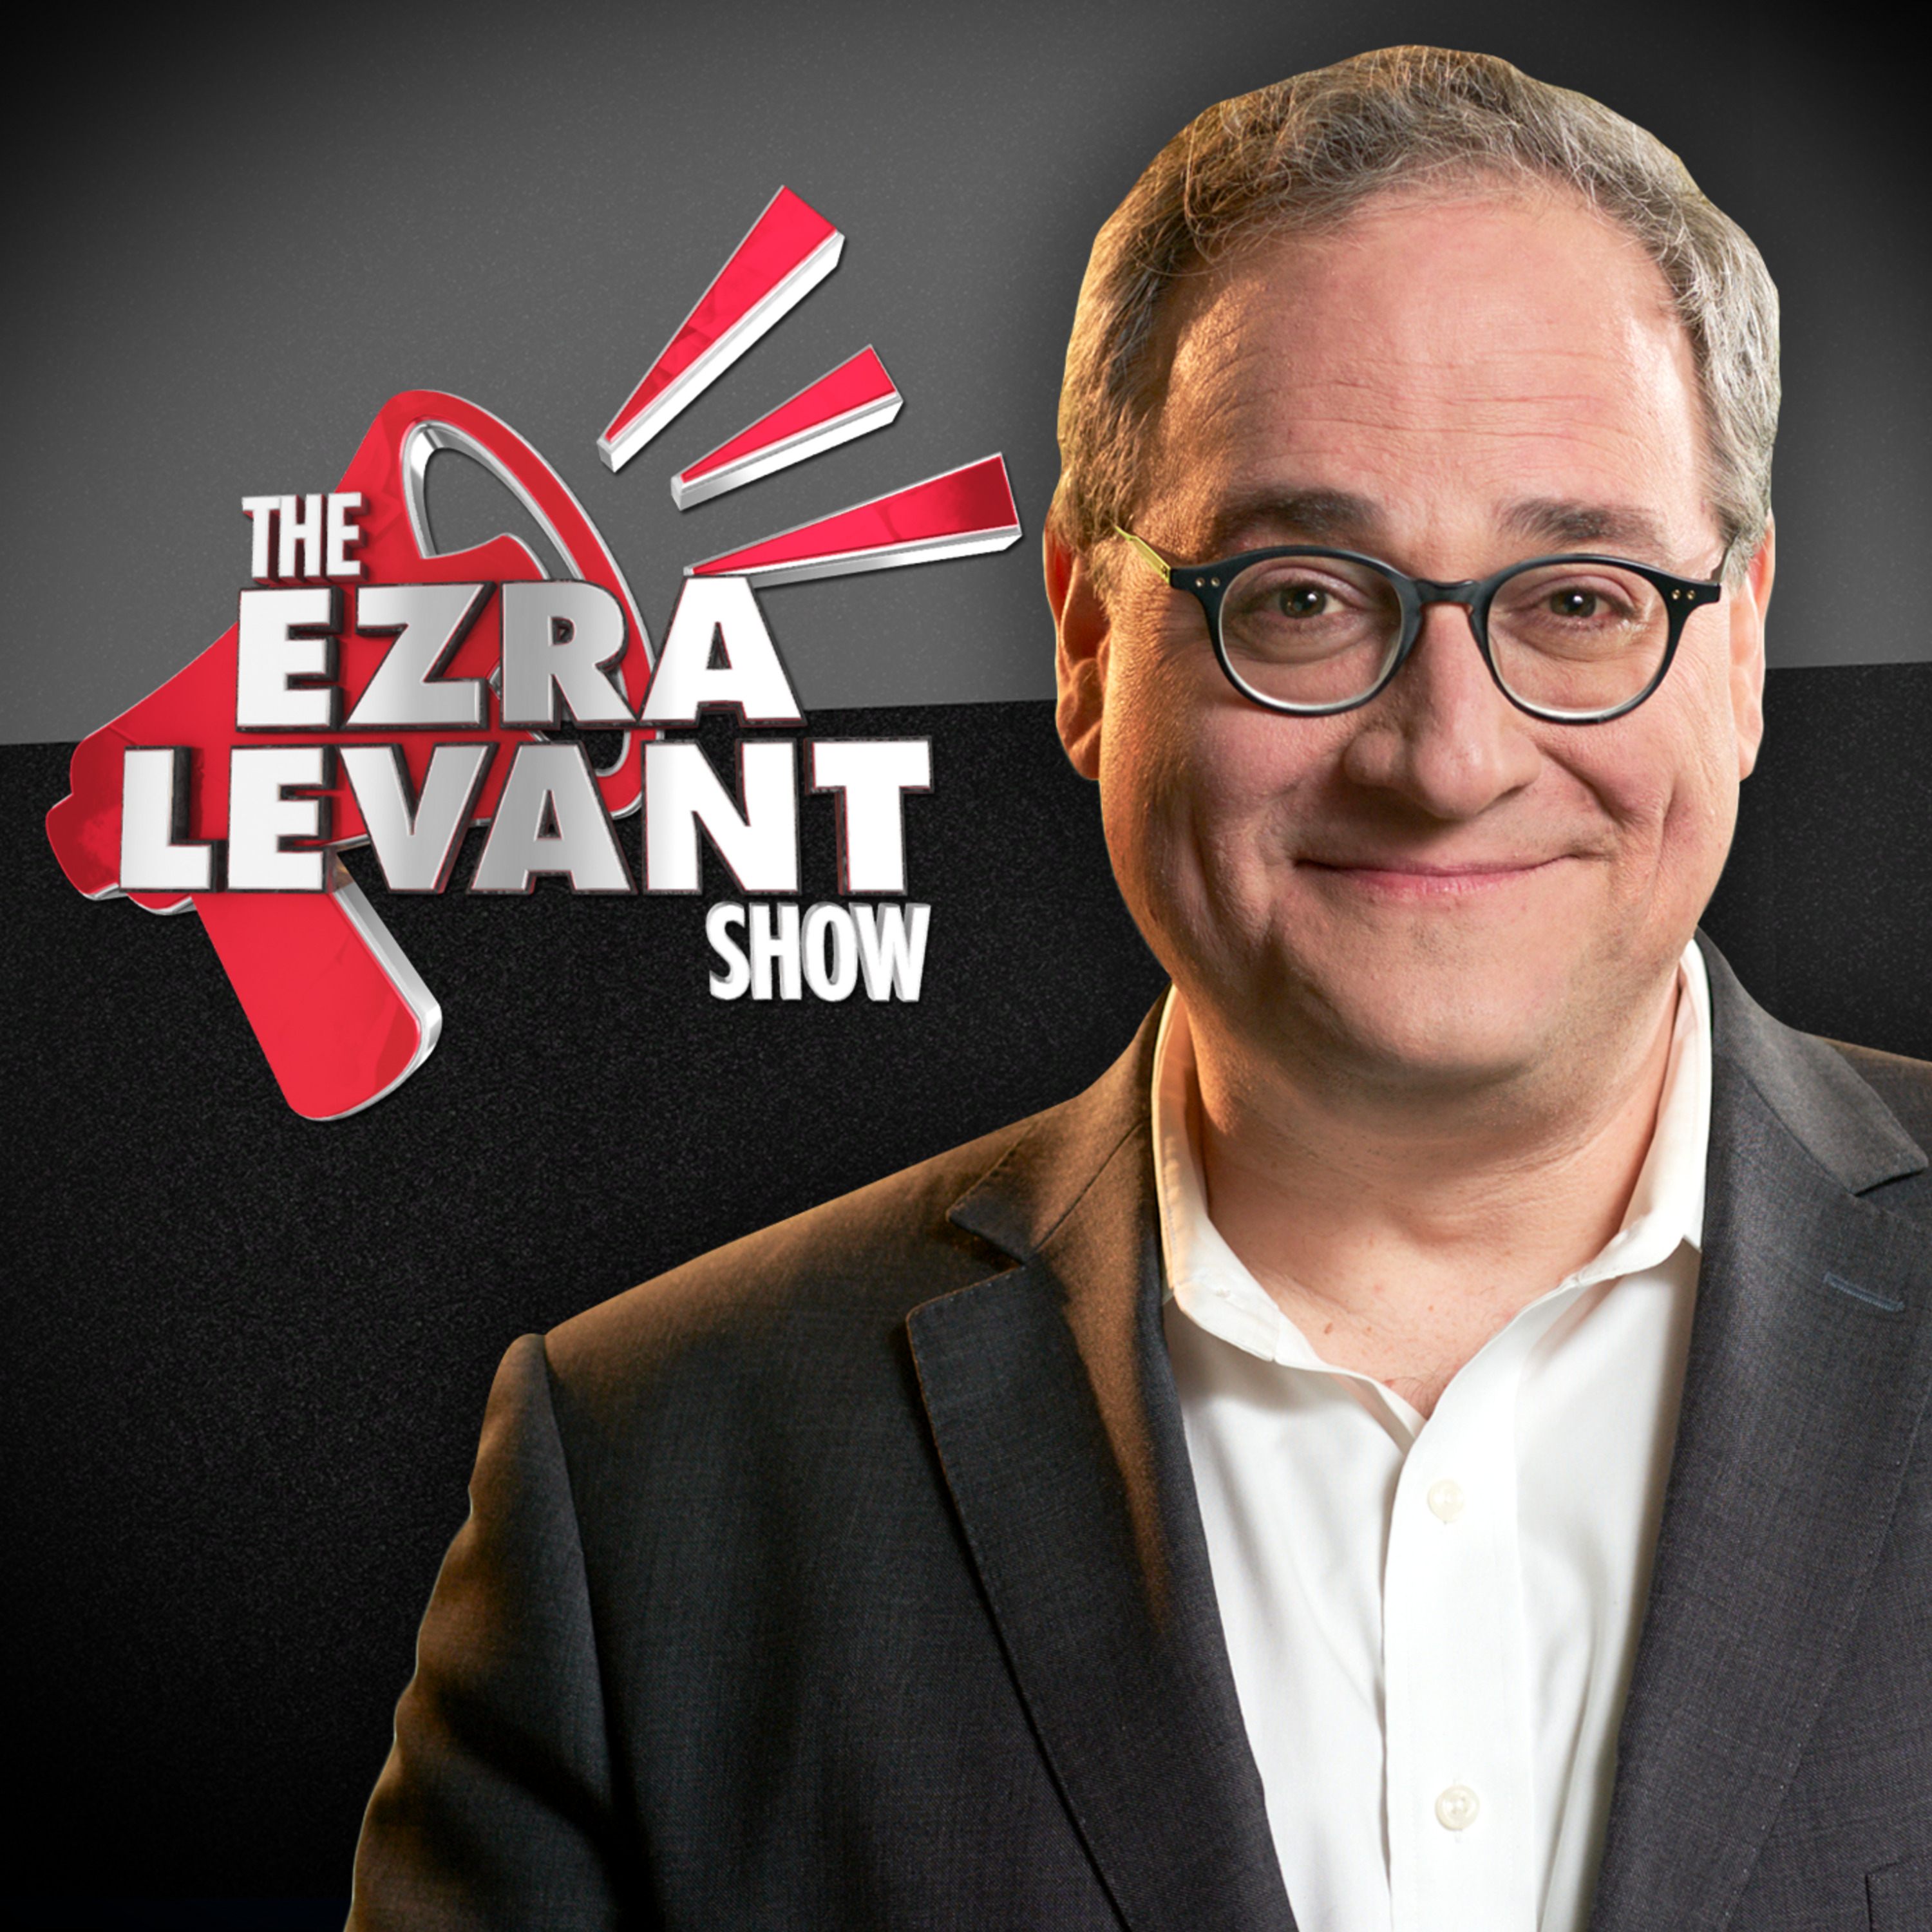 EZRA LEVANT | Three theories on the curious case of Kayla Lemieux